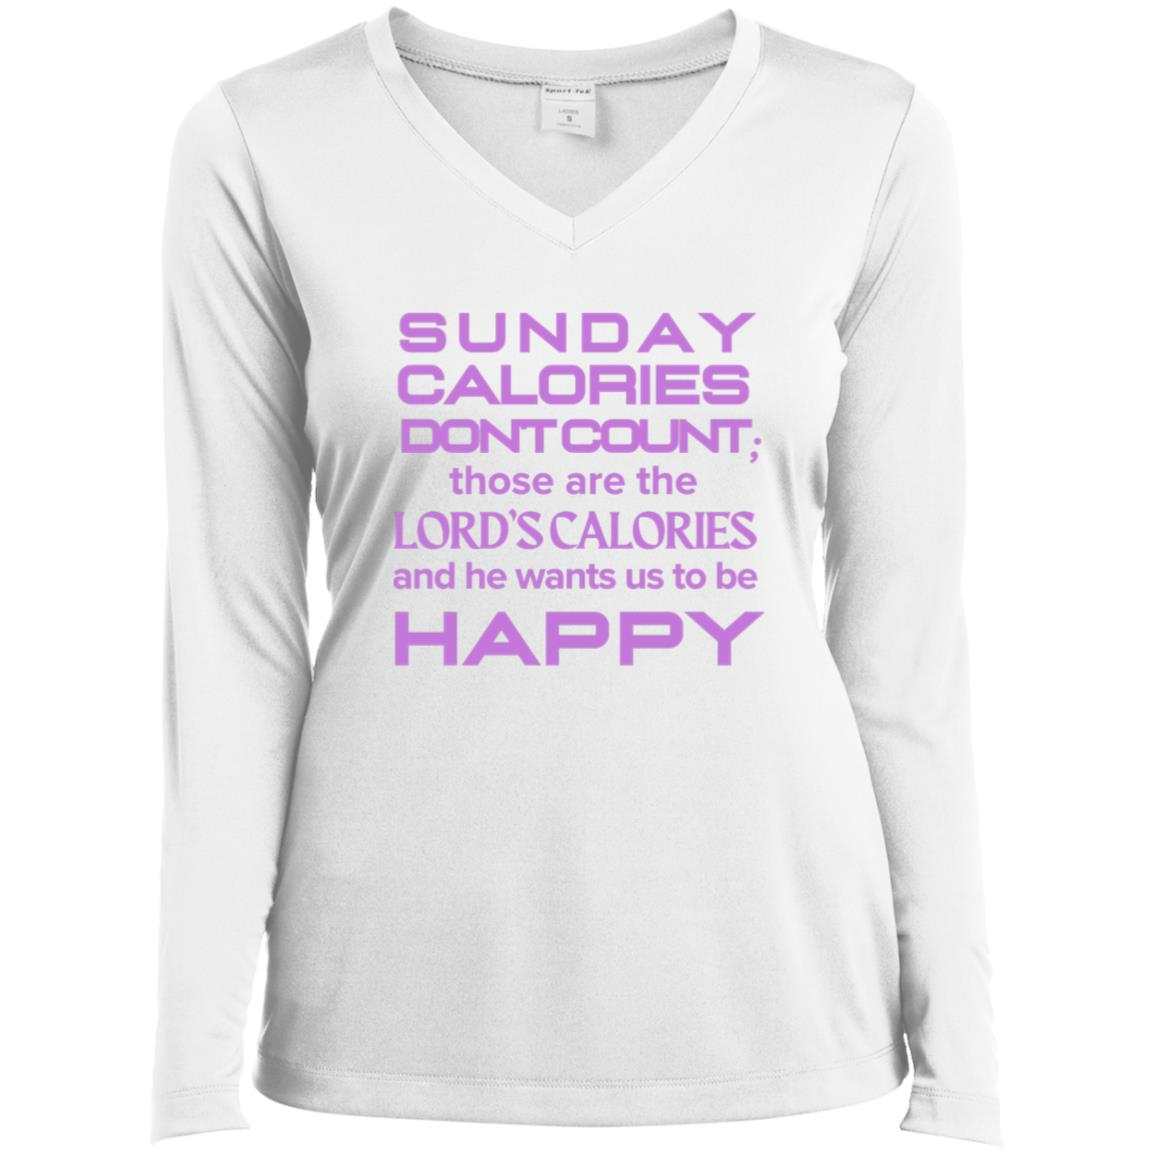 SUNDAY CALORIES Ladies’ Long Sleeve Performance V-Neck Tee